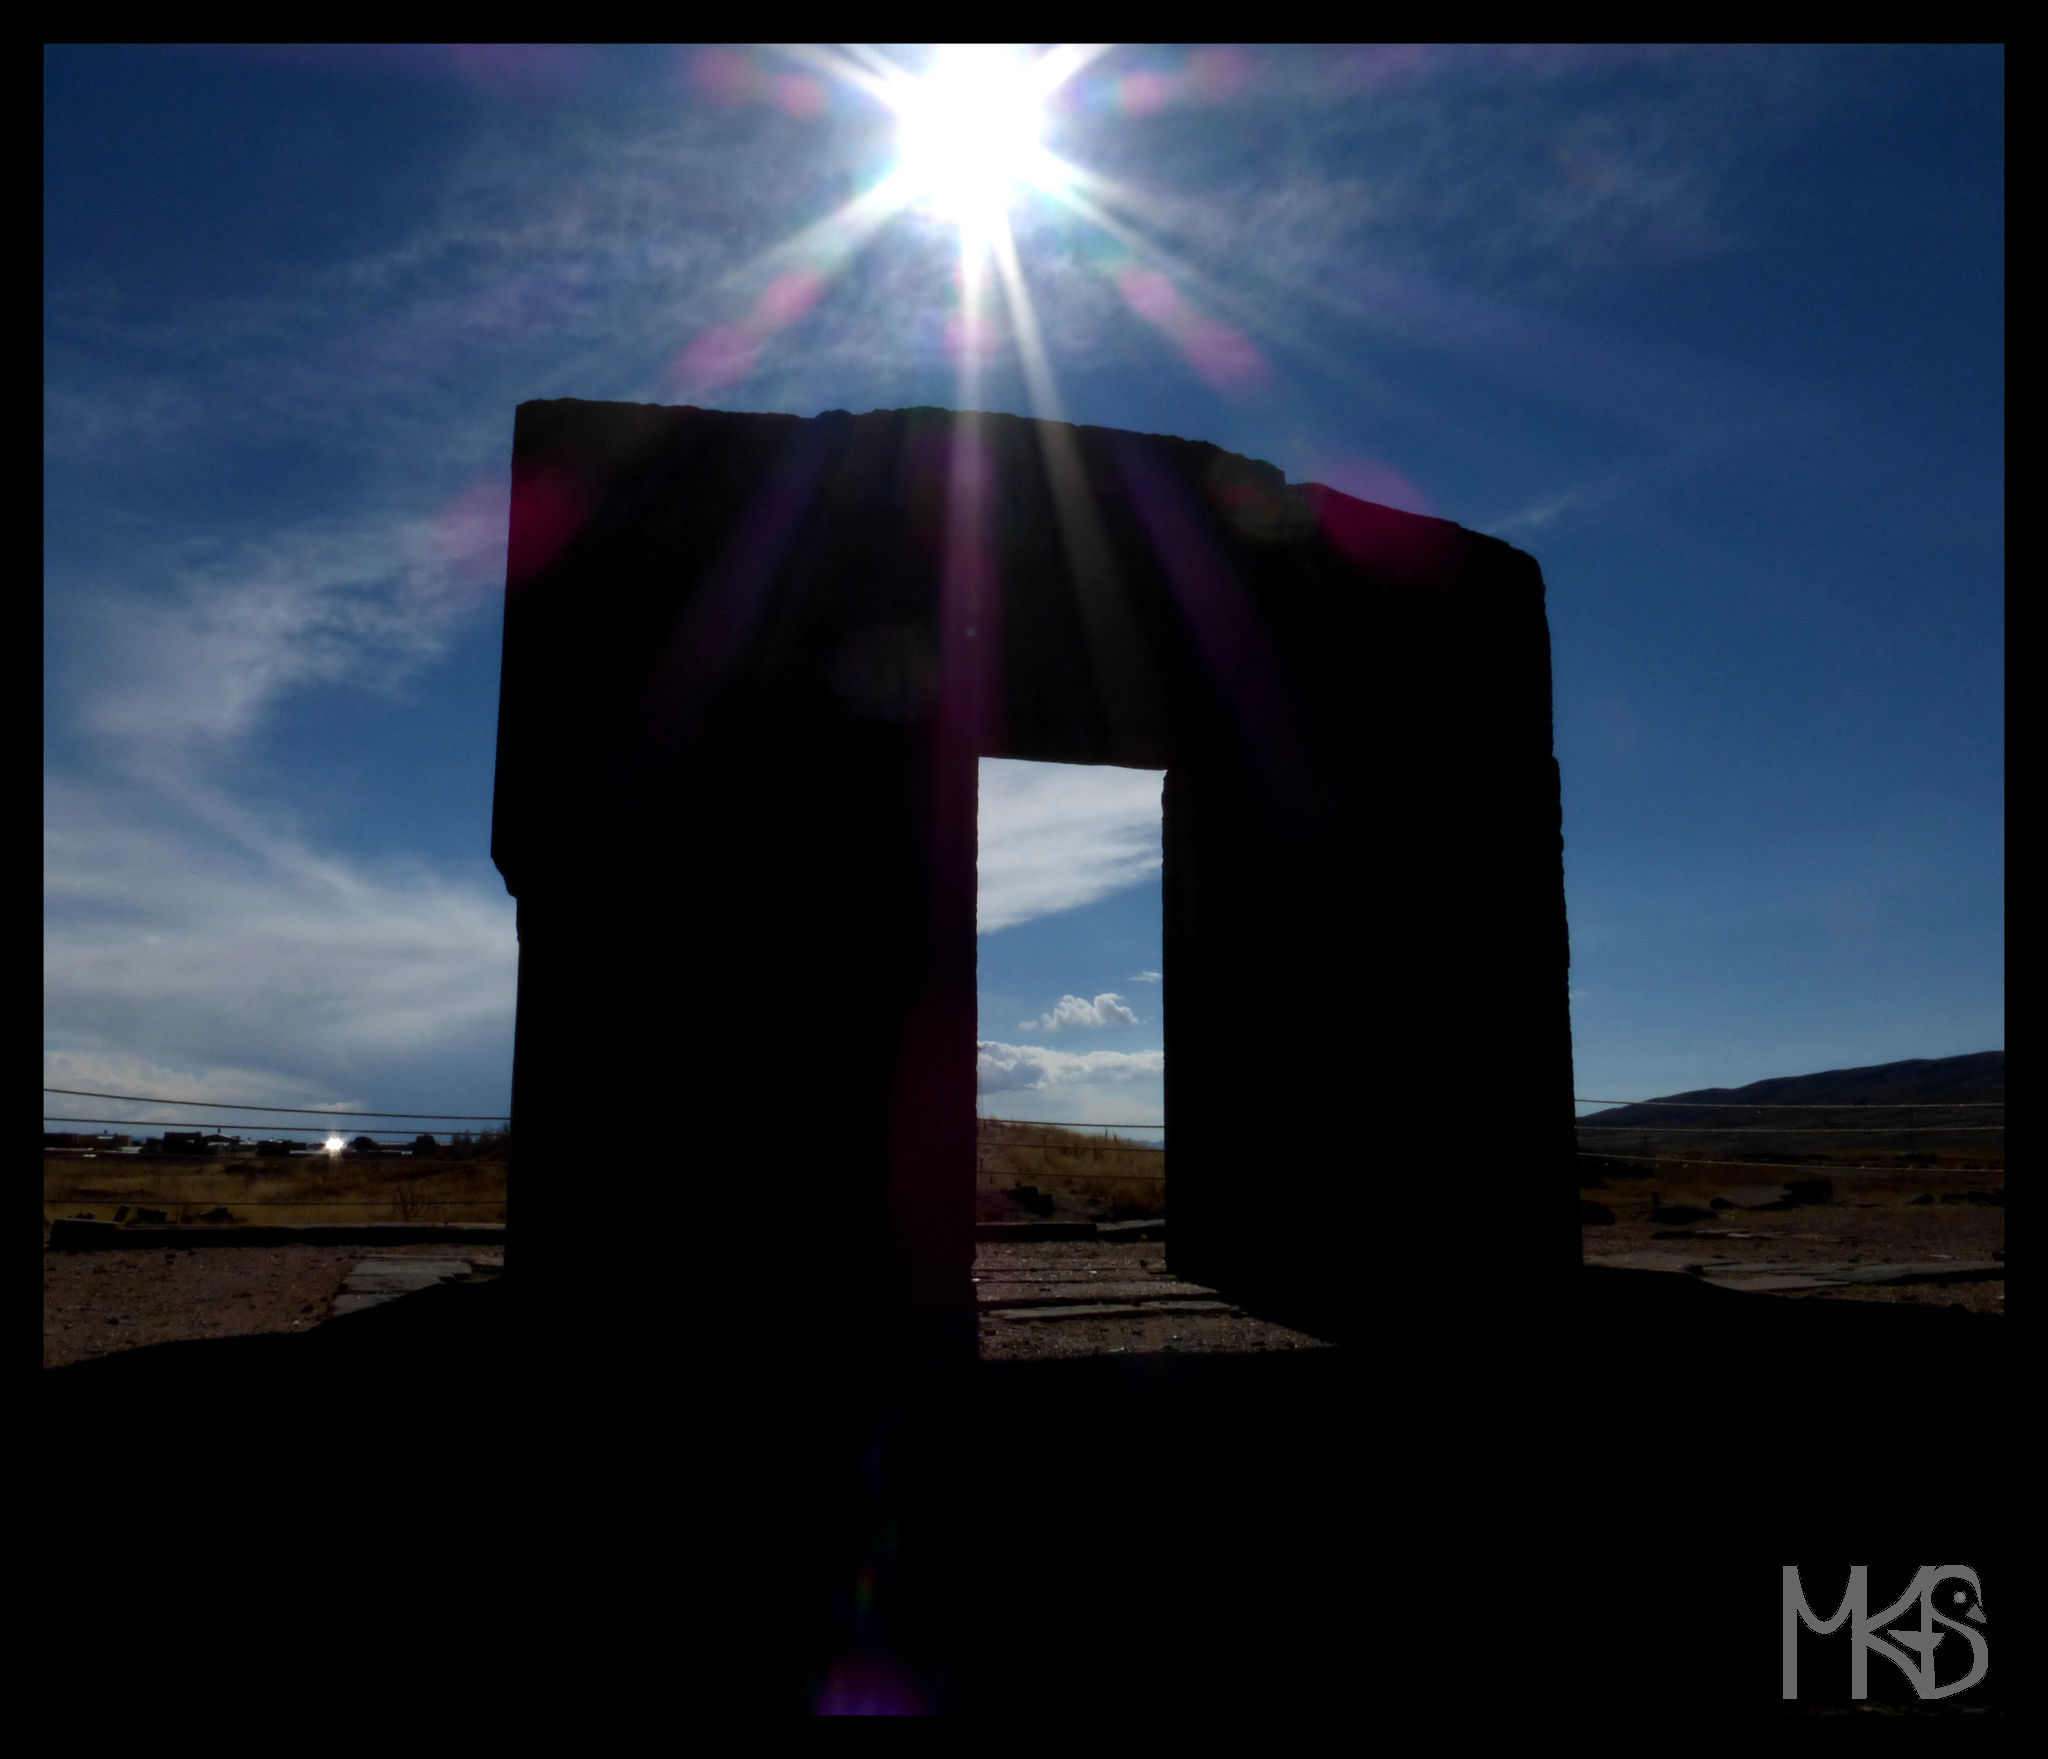 The "Gate of the Sun", Tiwanaku, Bolivia